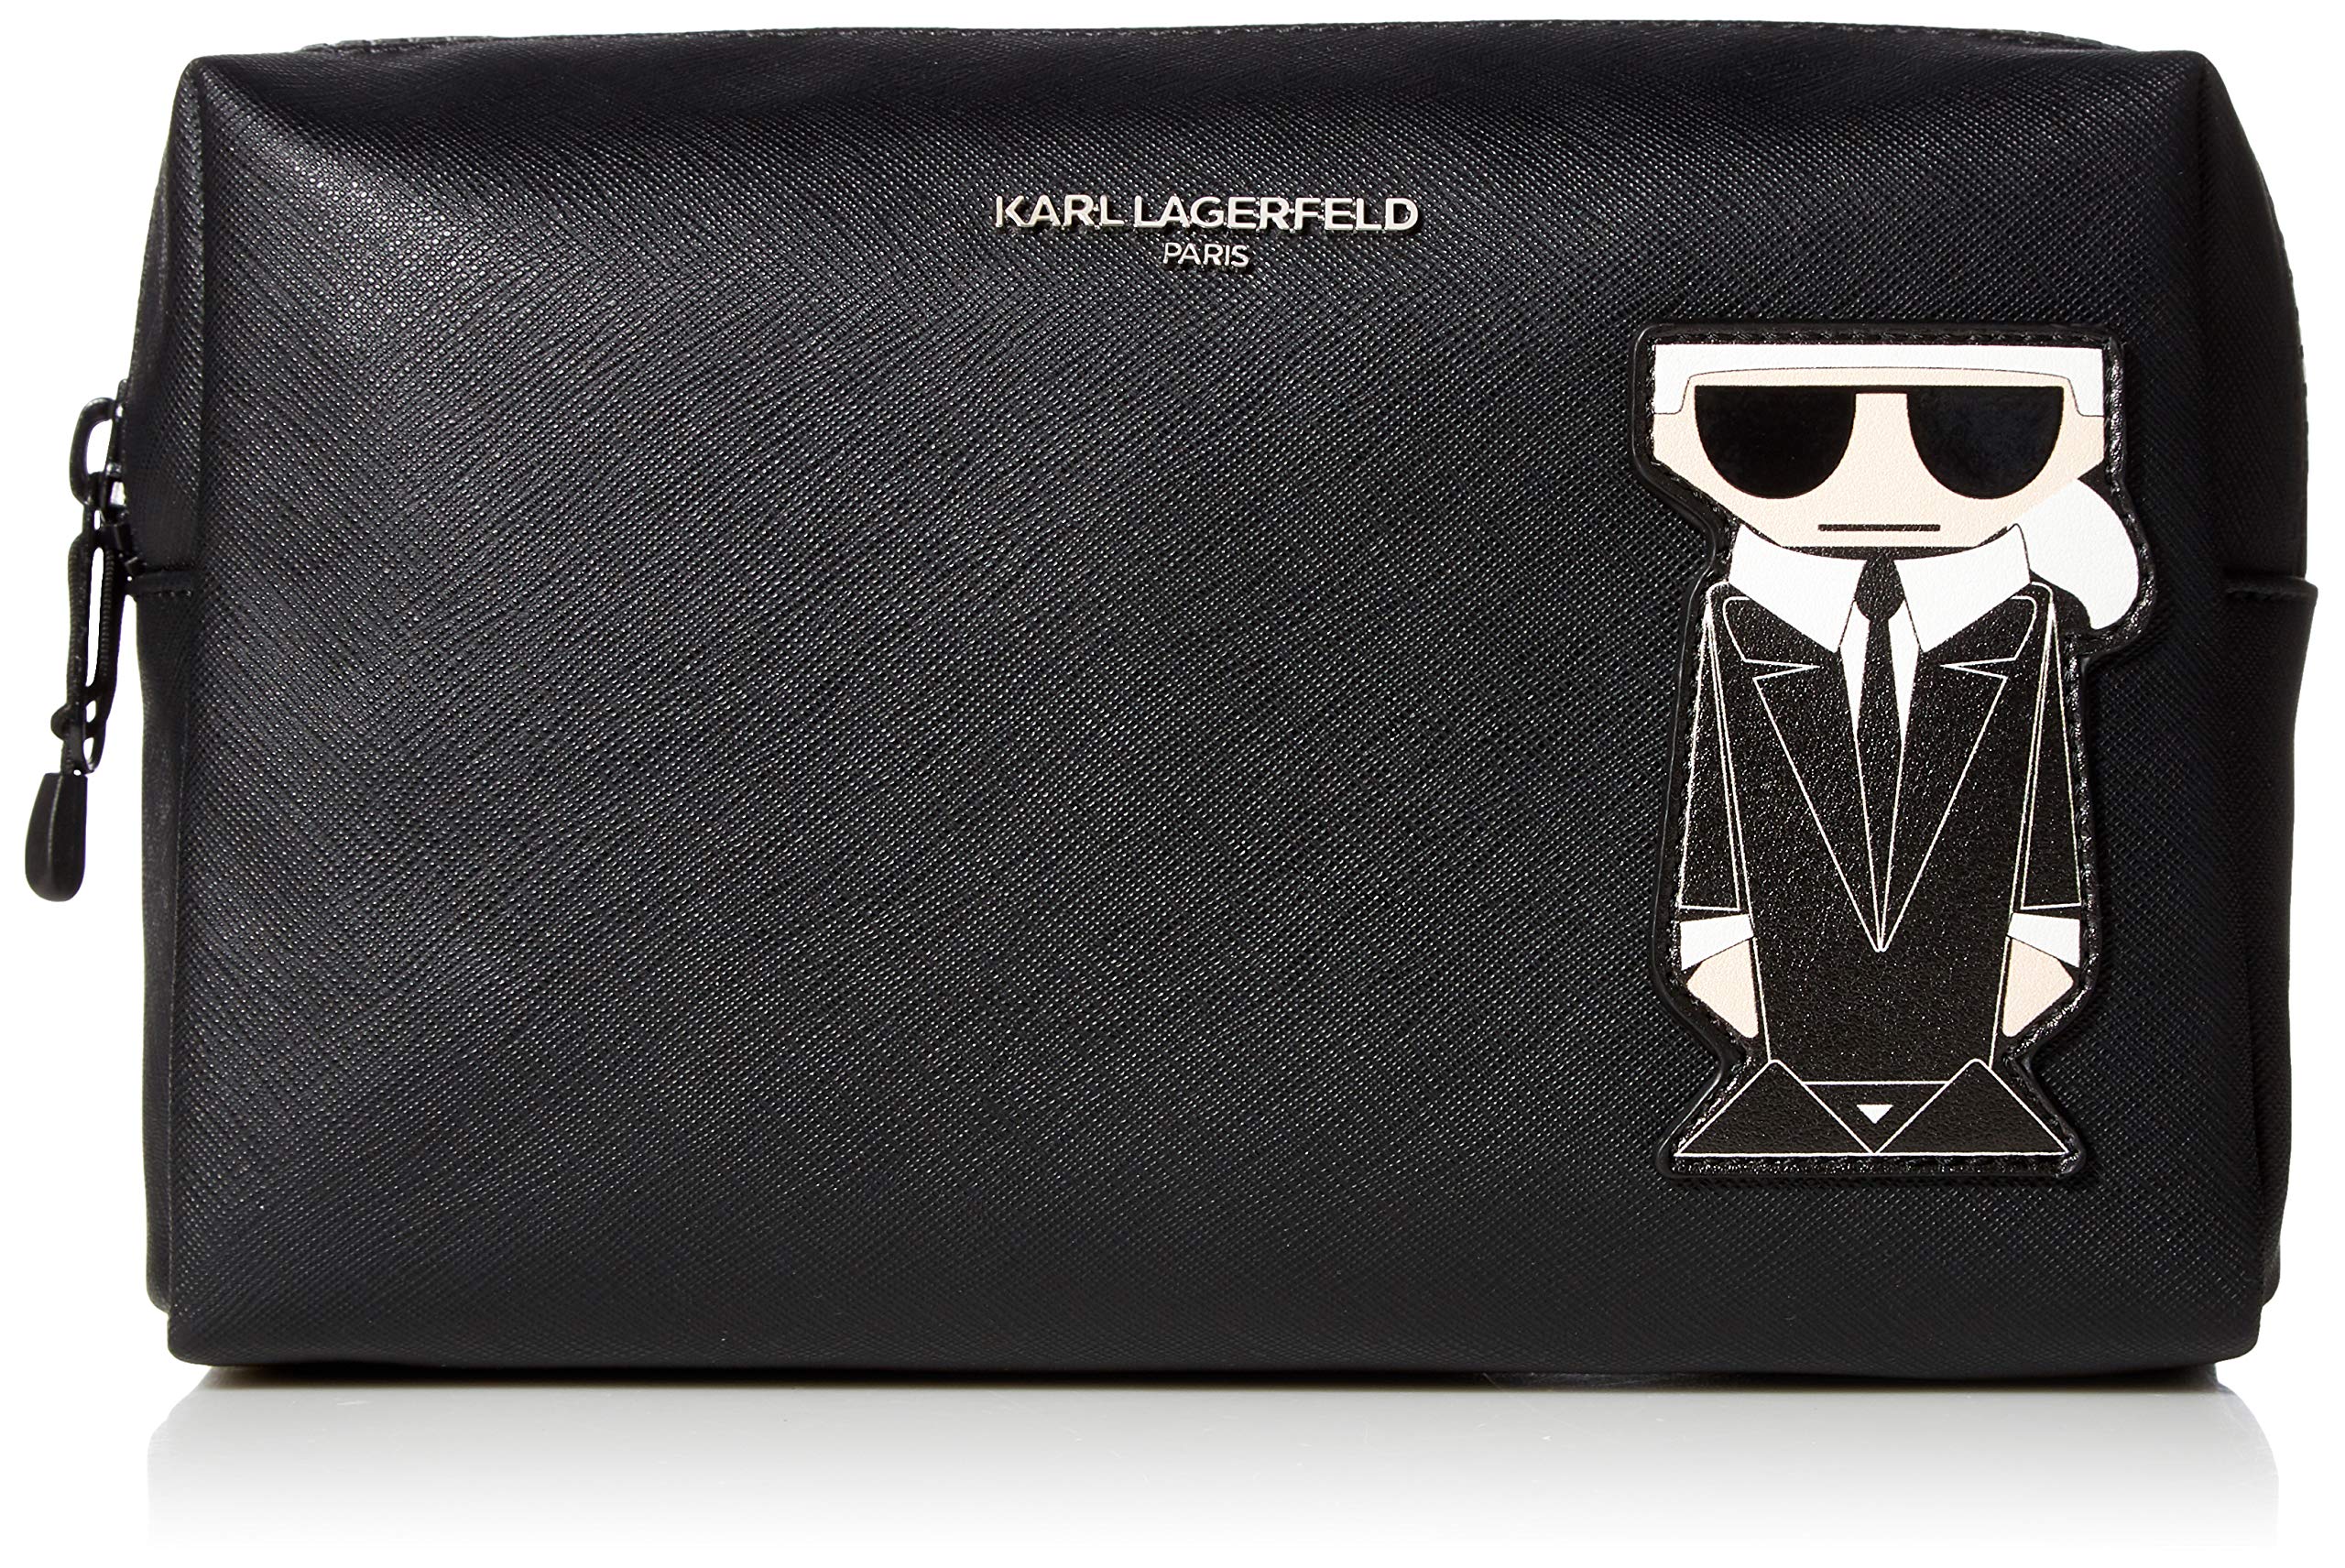 Karl Lagerfeld Paris Women's Cosmetic Bag